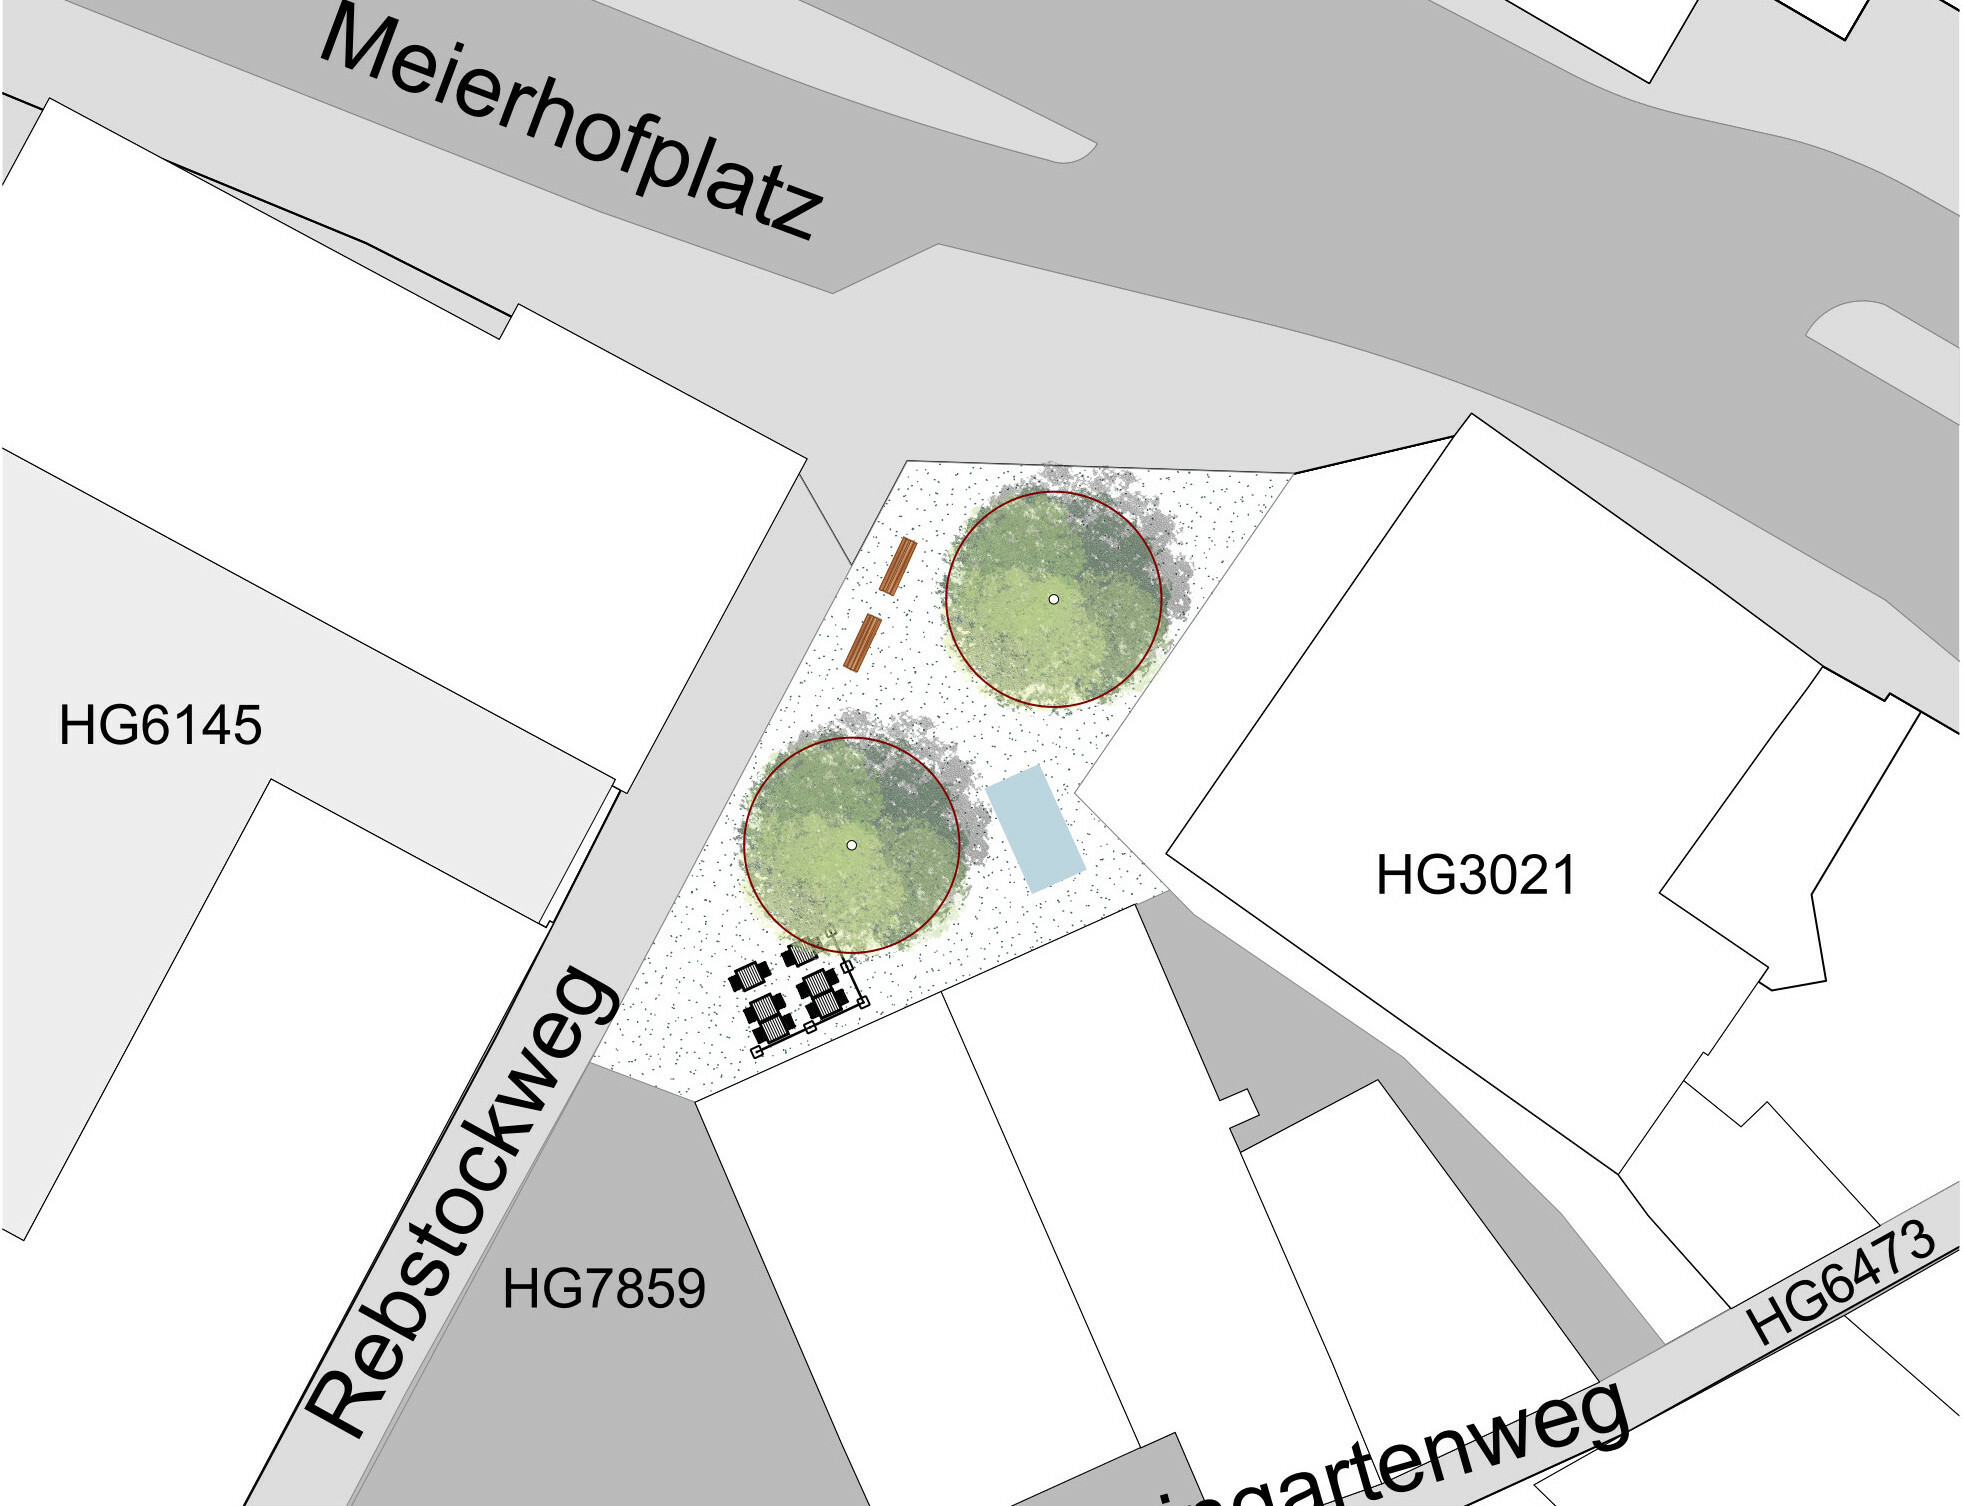 Plan Meierhofplatz